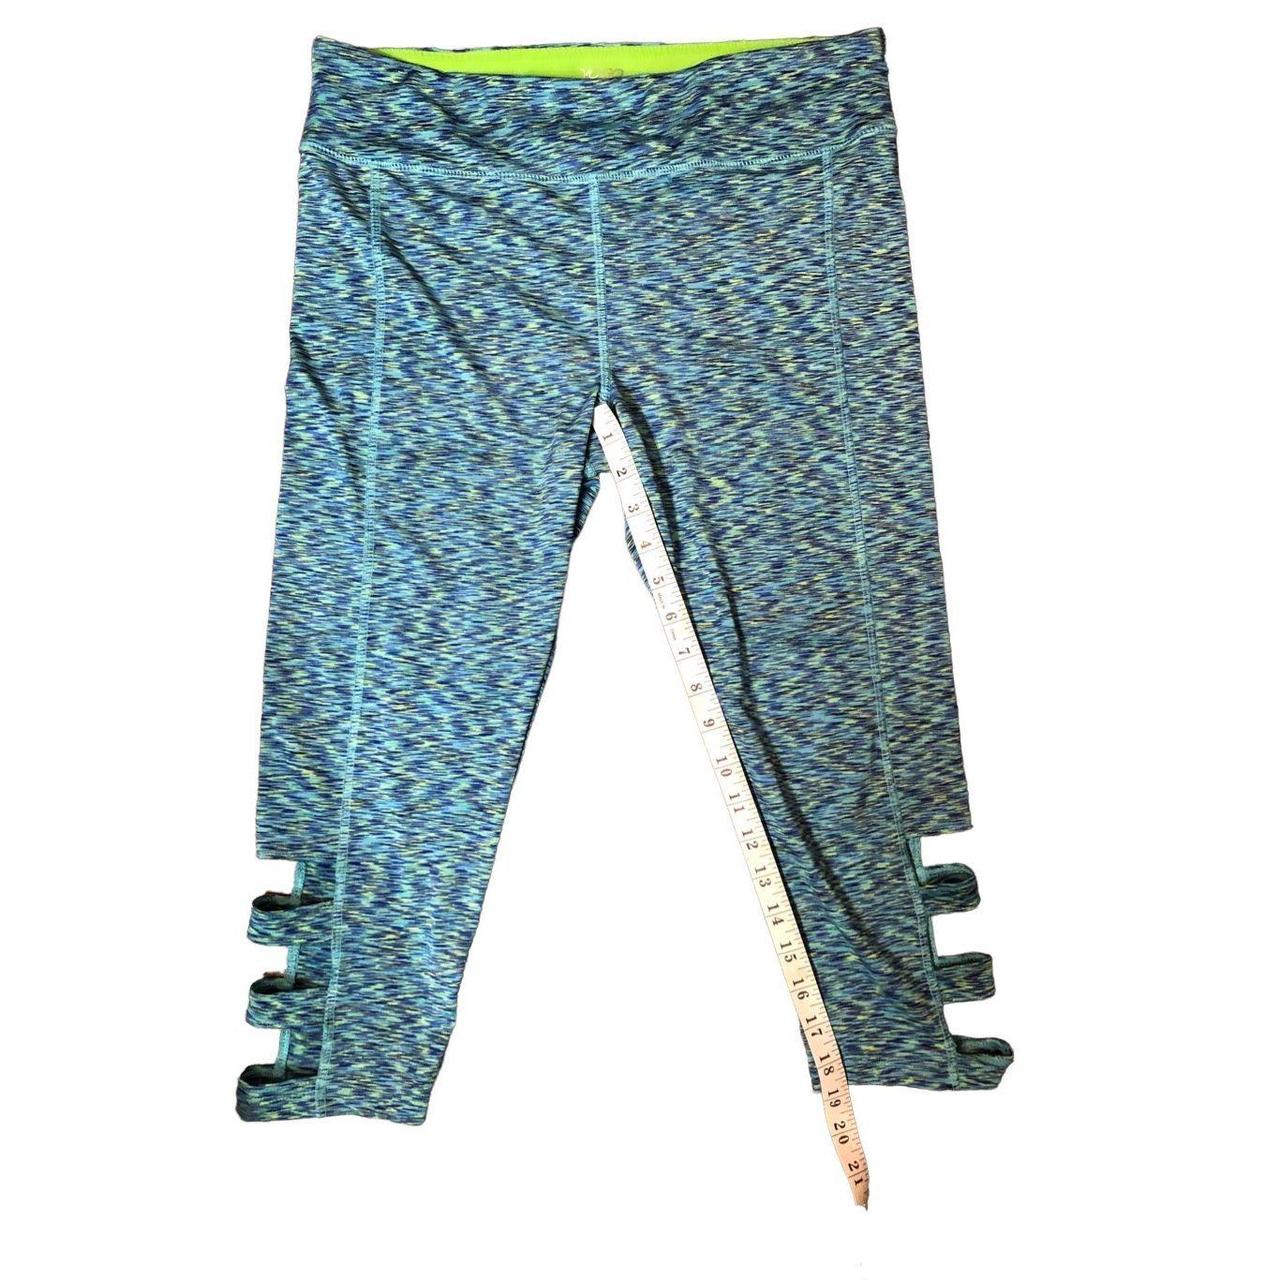 Vogo space dye cropped athletic yoga pants. Speed - Depop